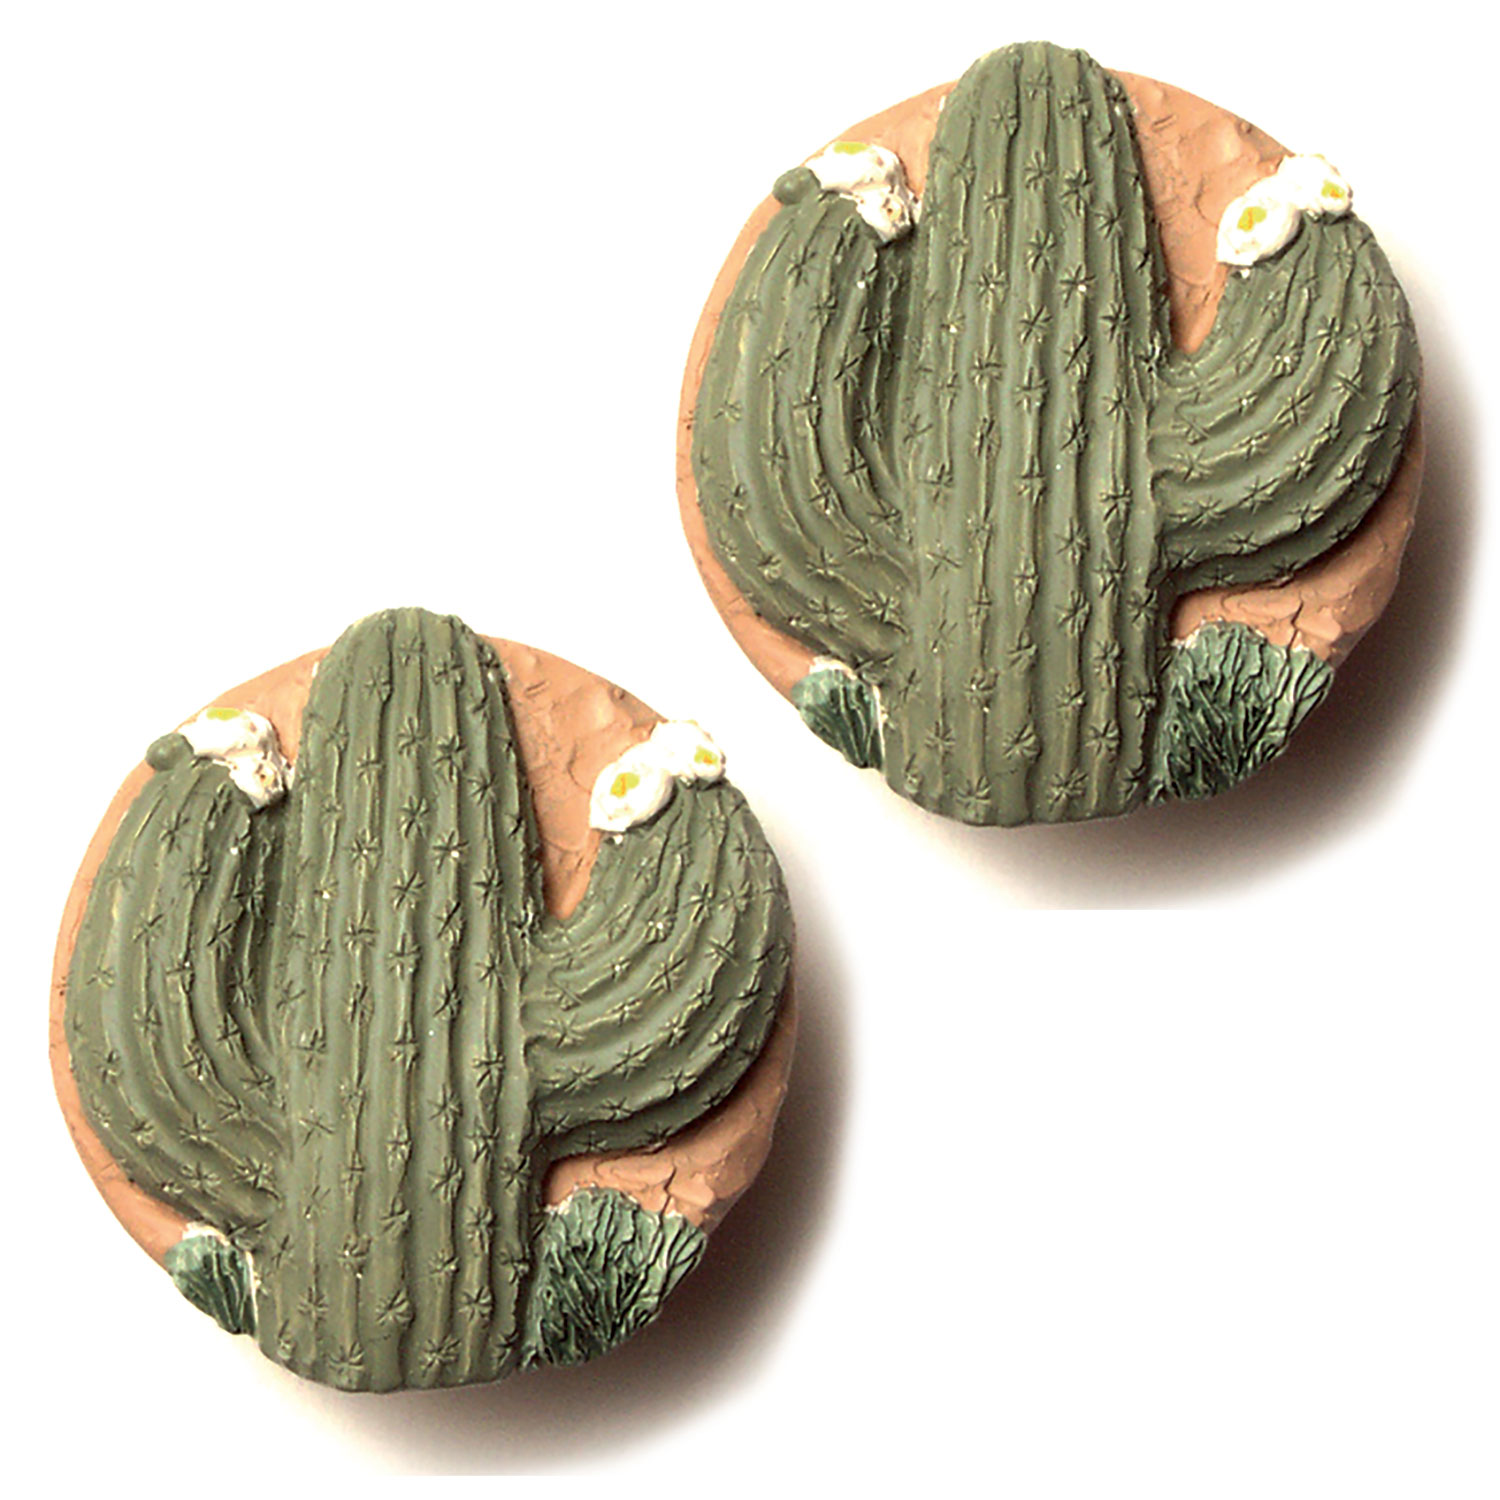 131160 - Vickilane Hand Painted Drawer Pull Set of 2 - Saguaro Cactus